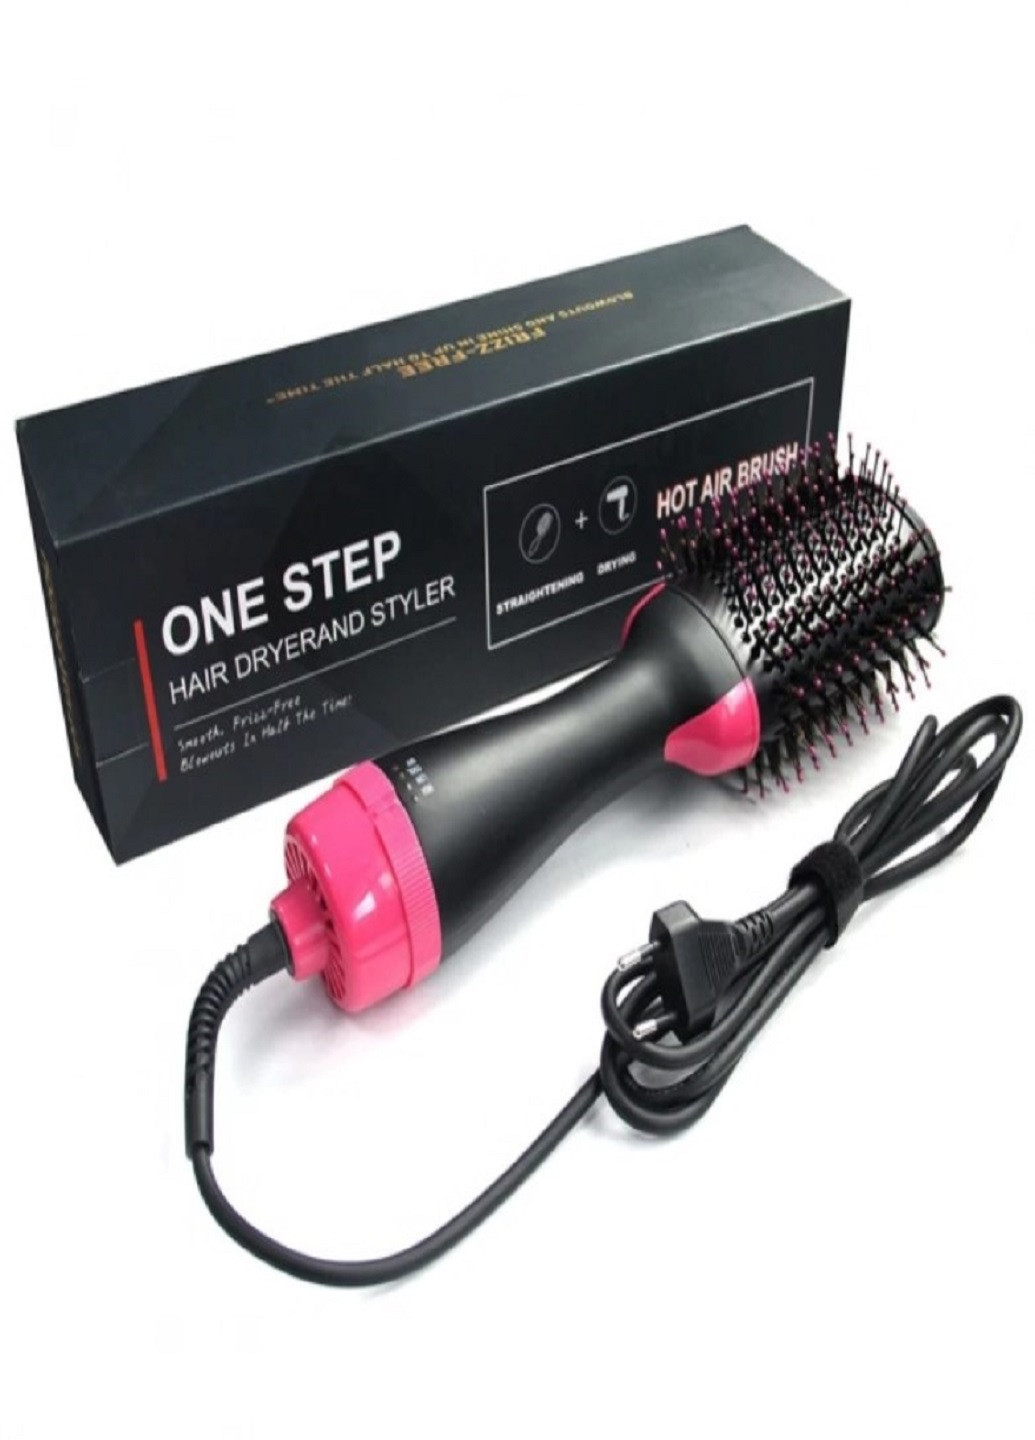 Фен щетка One Step Hair Dryer and Styler стайлер 3 в 1 для укладки волос VTech (259522124)